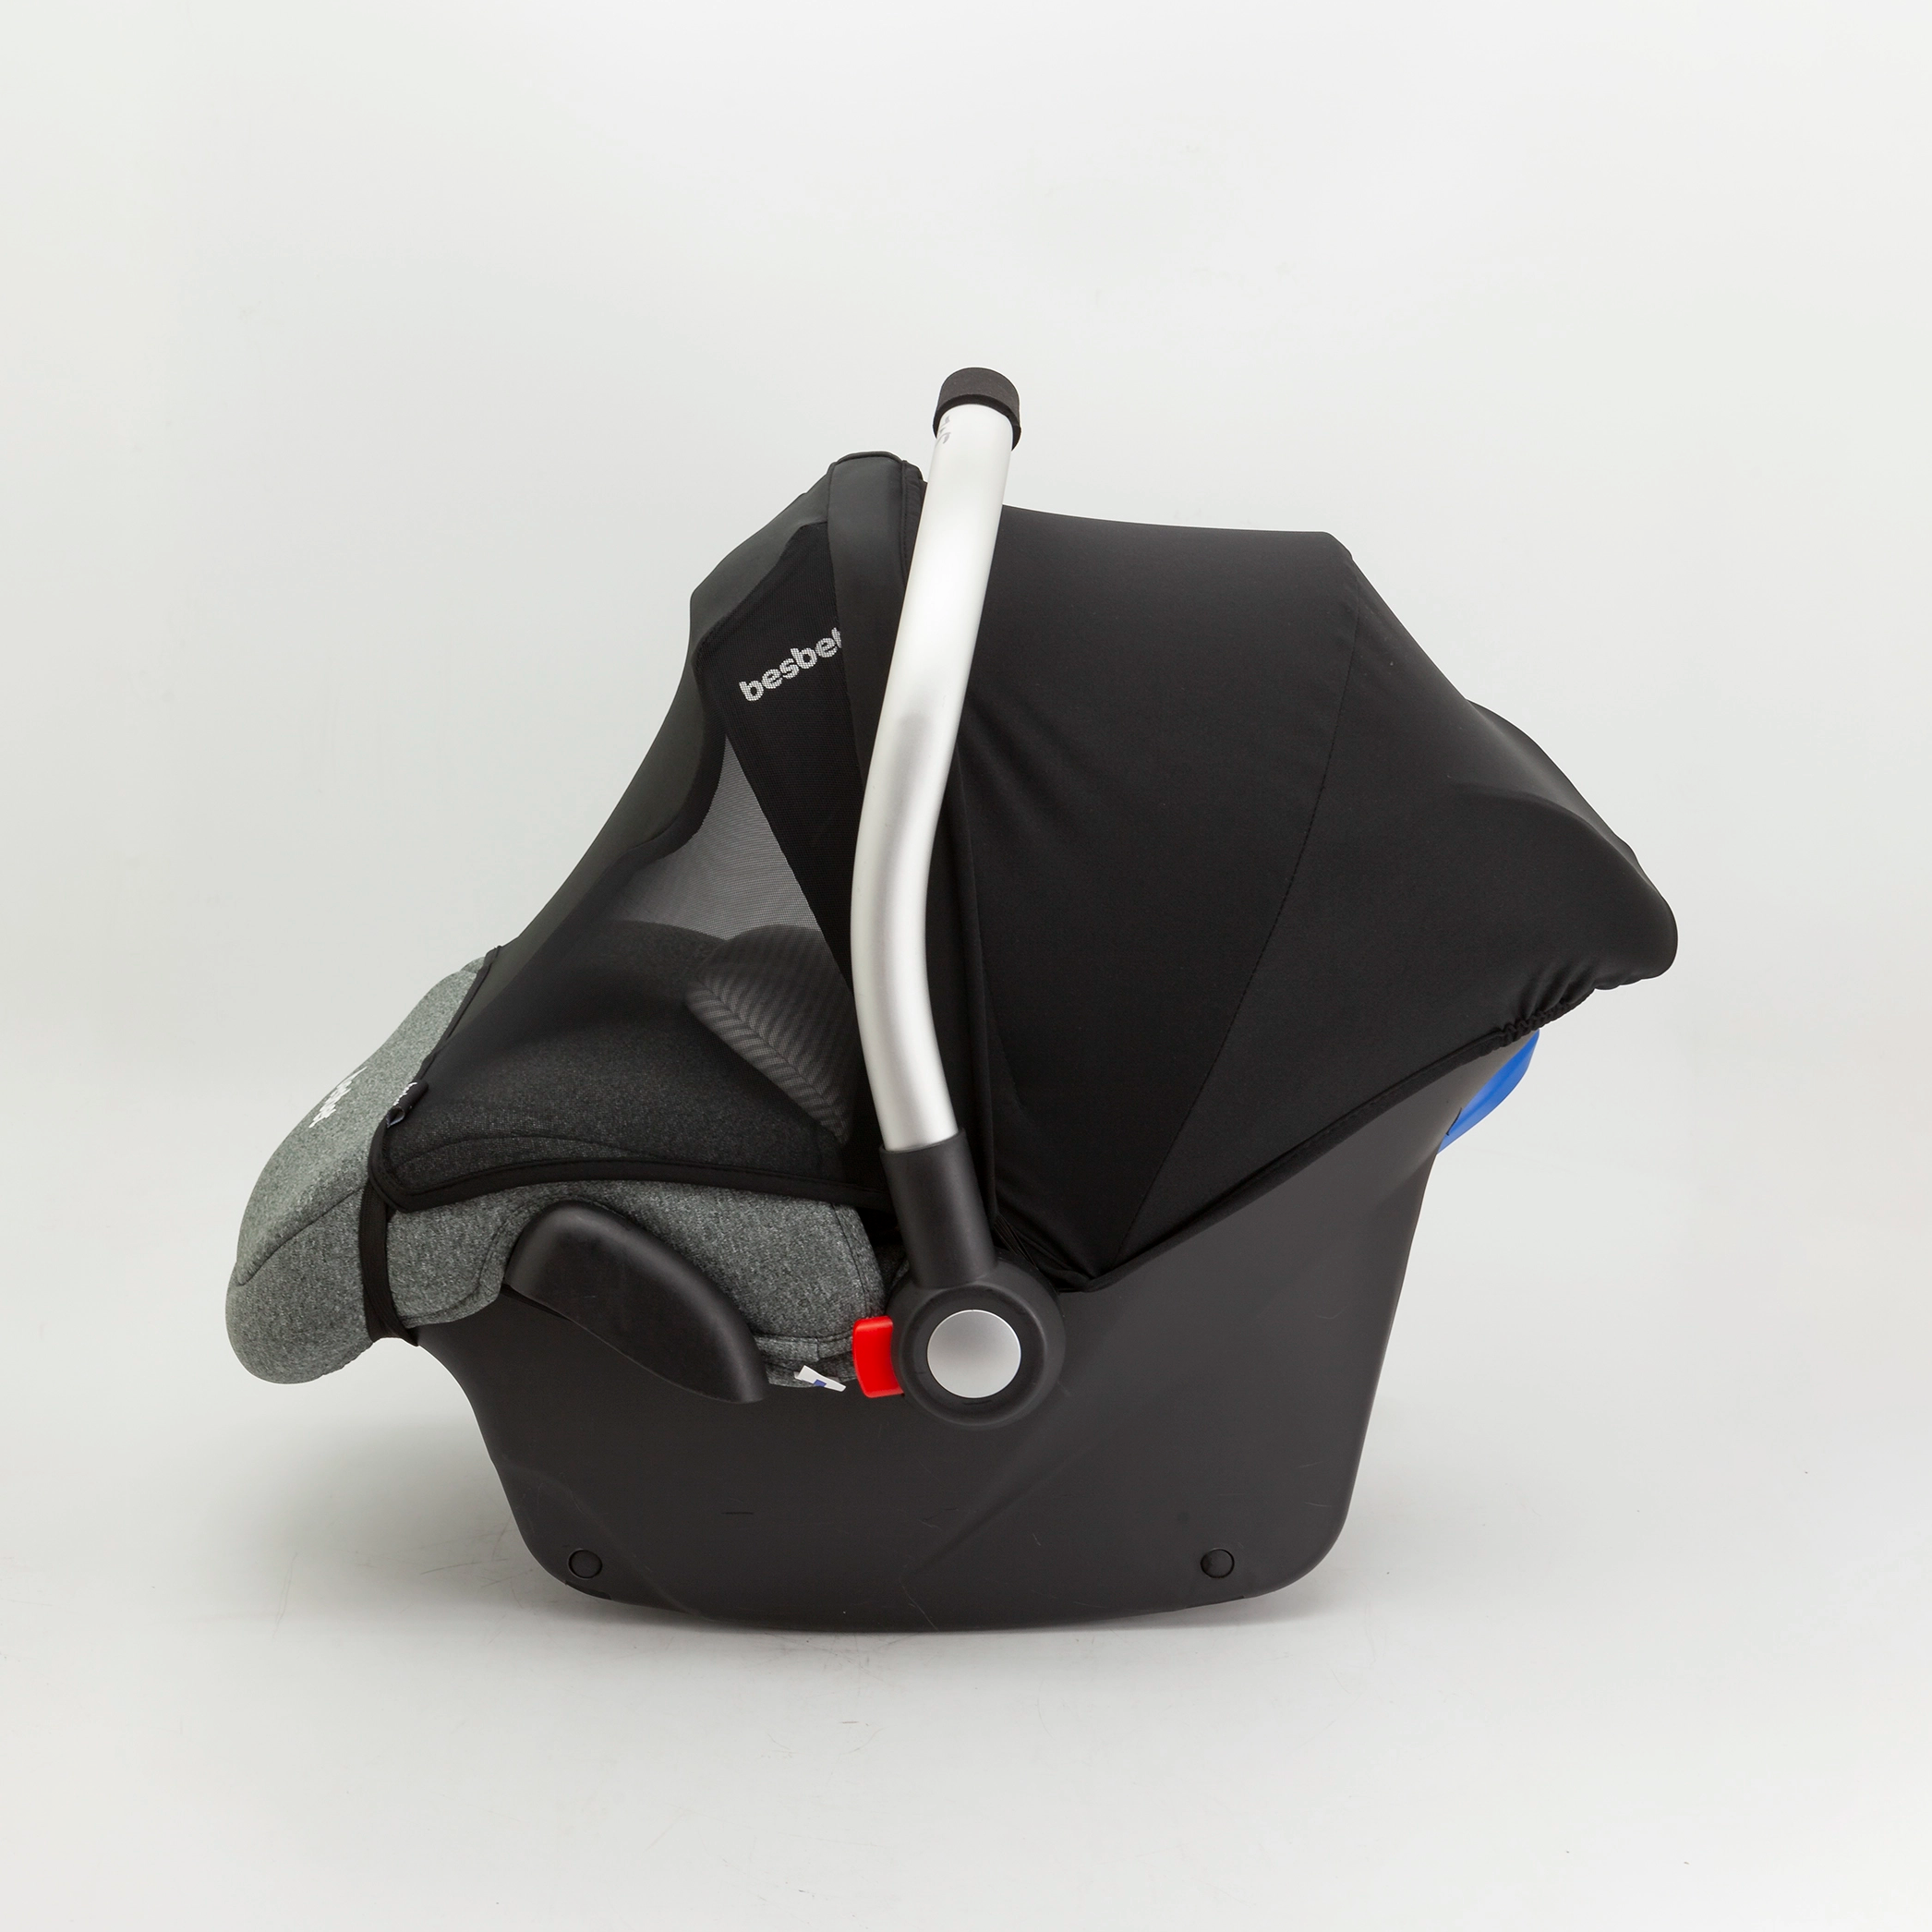 YKO - 705 Infant Car Seat